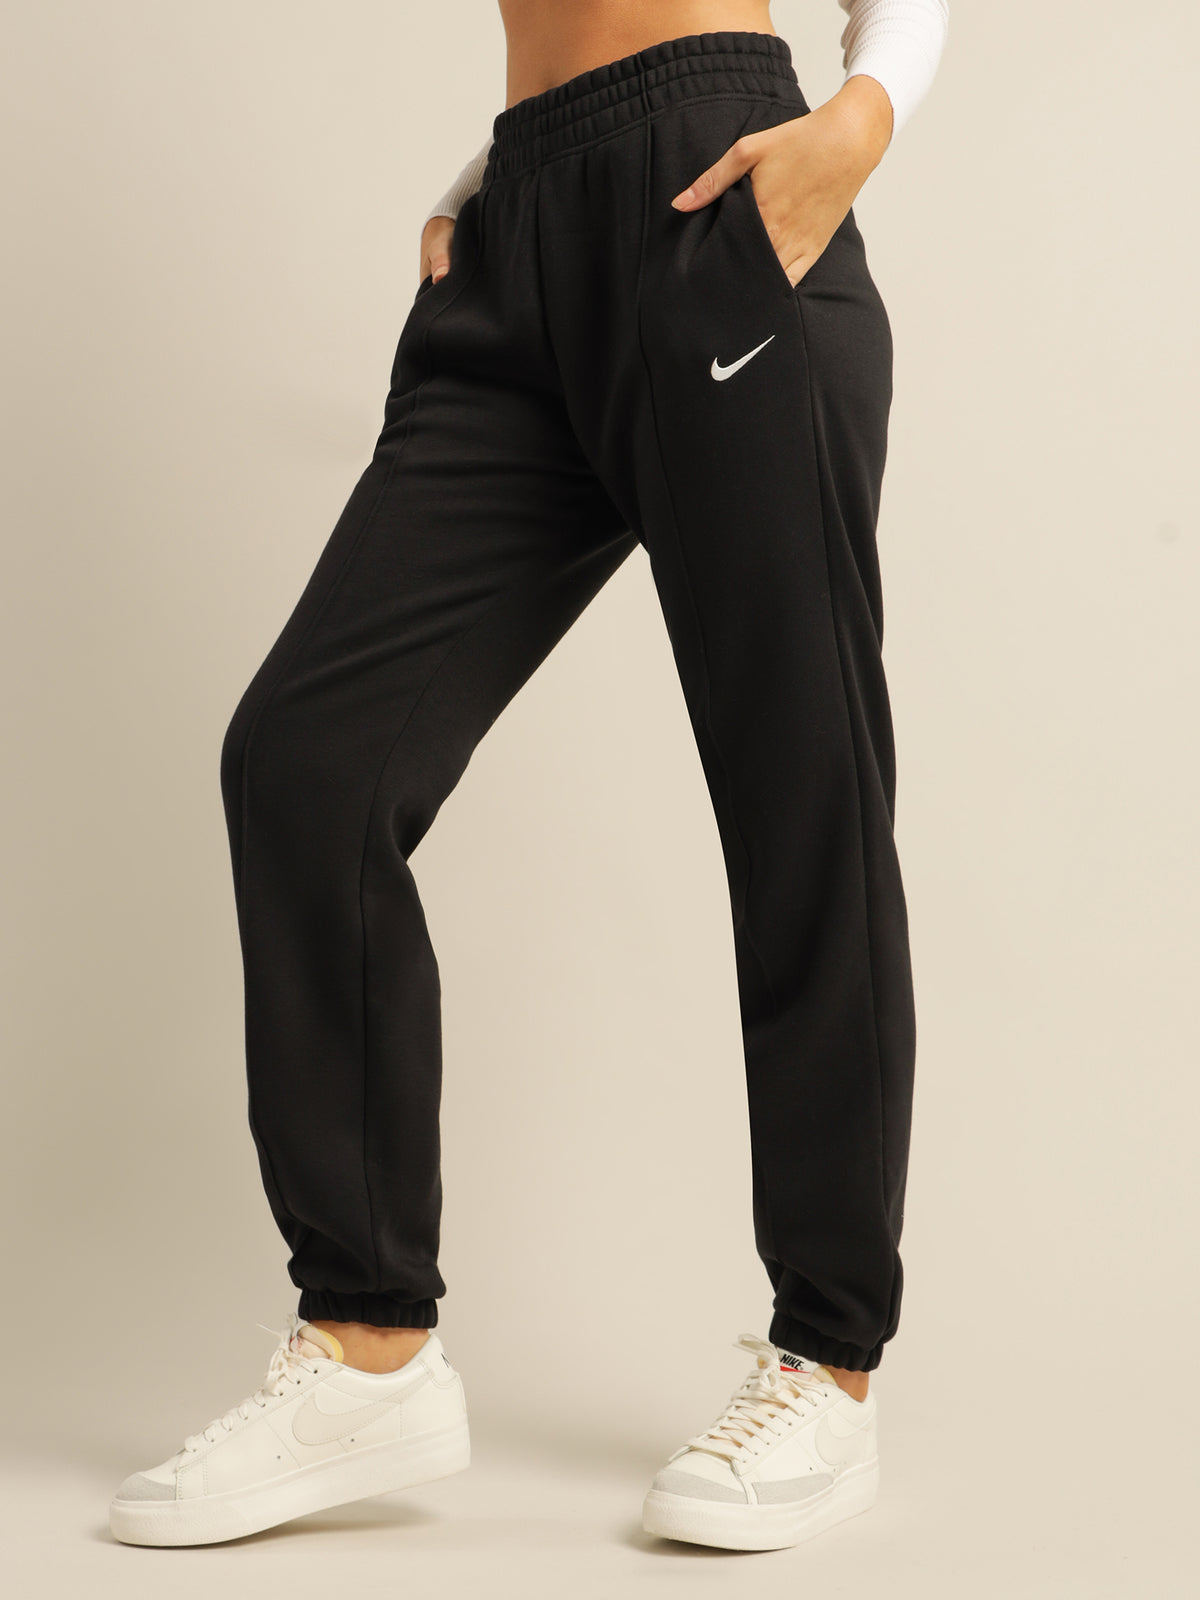 Sportswear Essential Collection Fleece Pants in Black